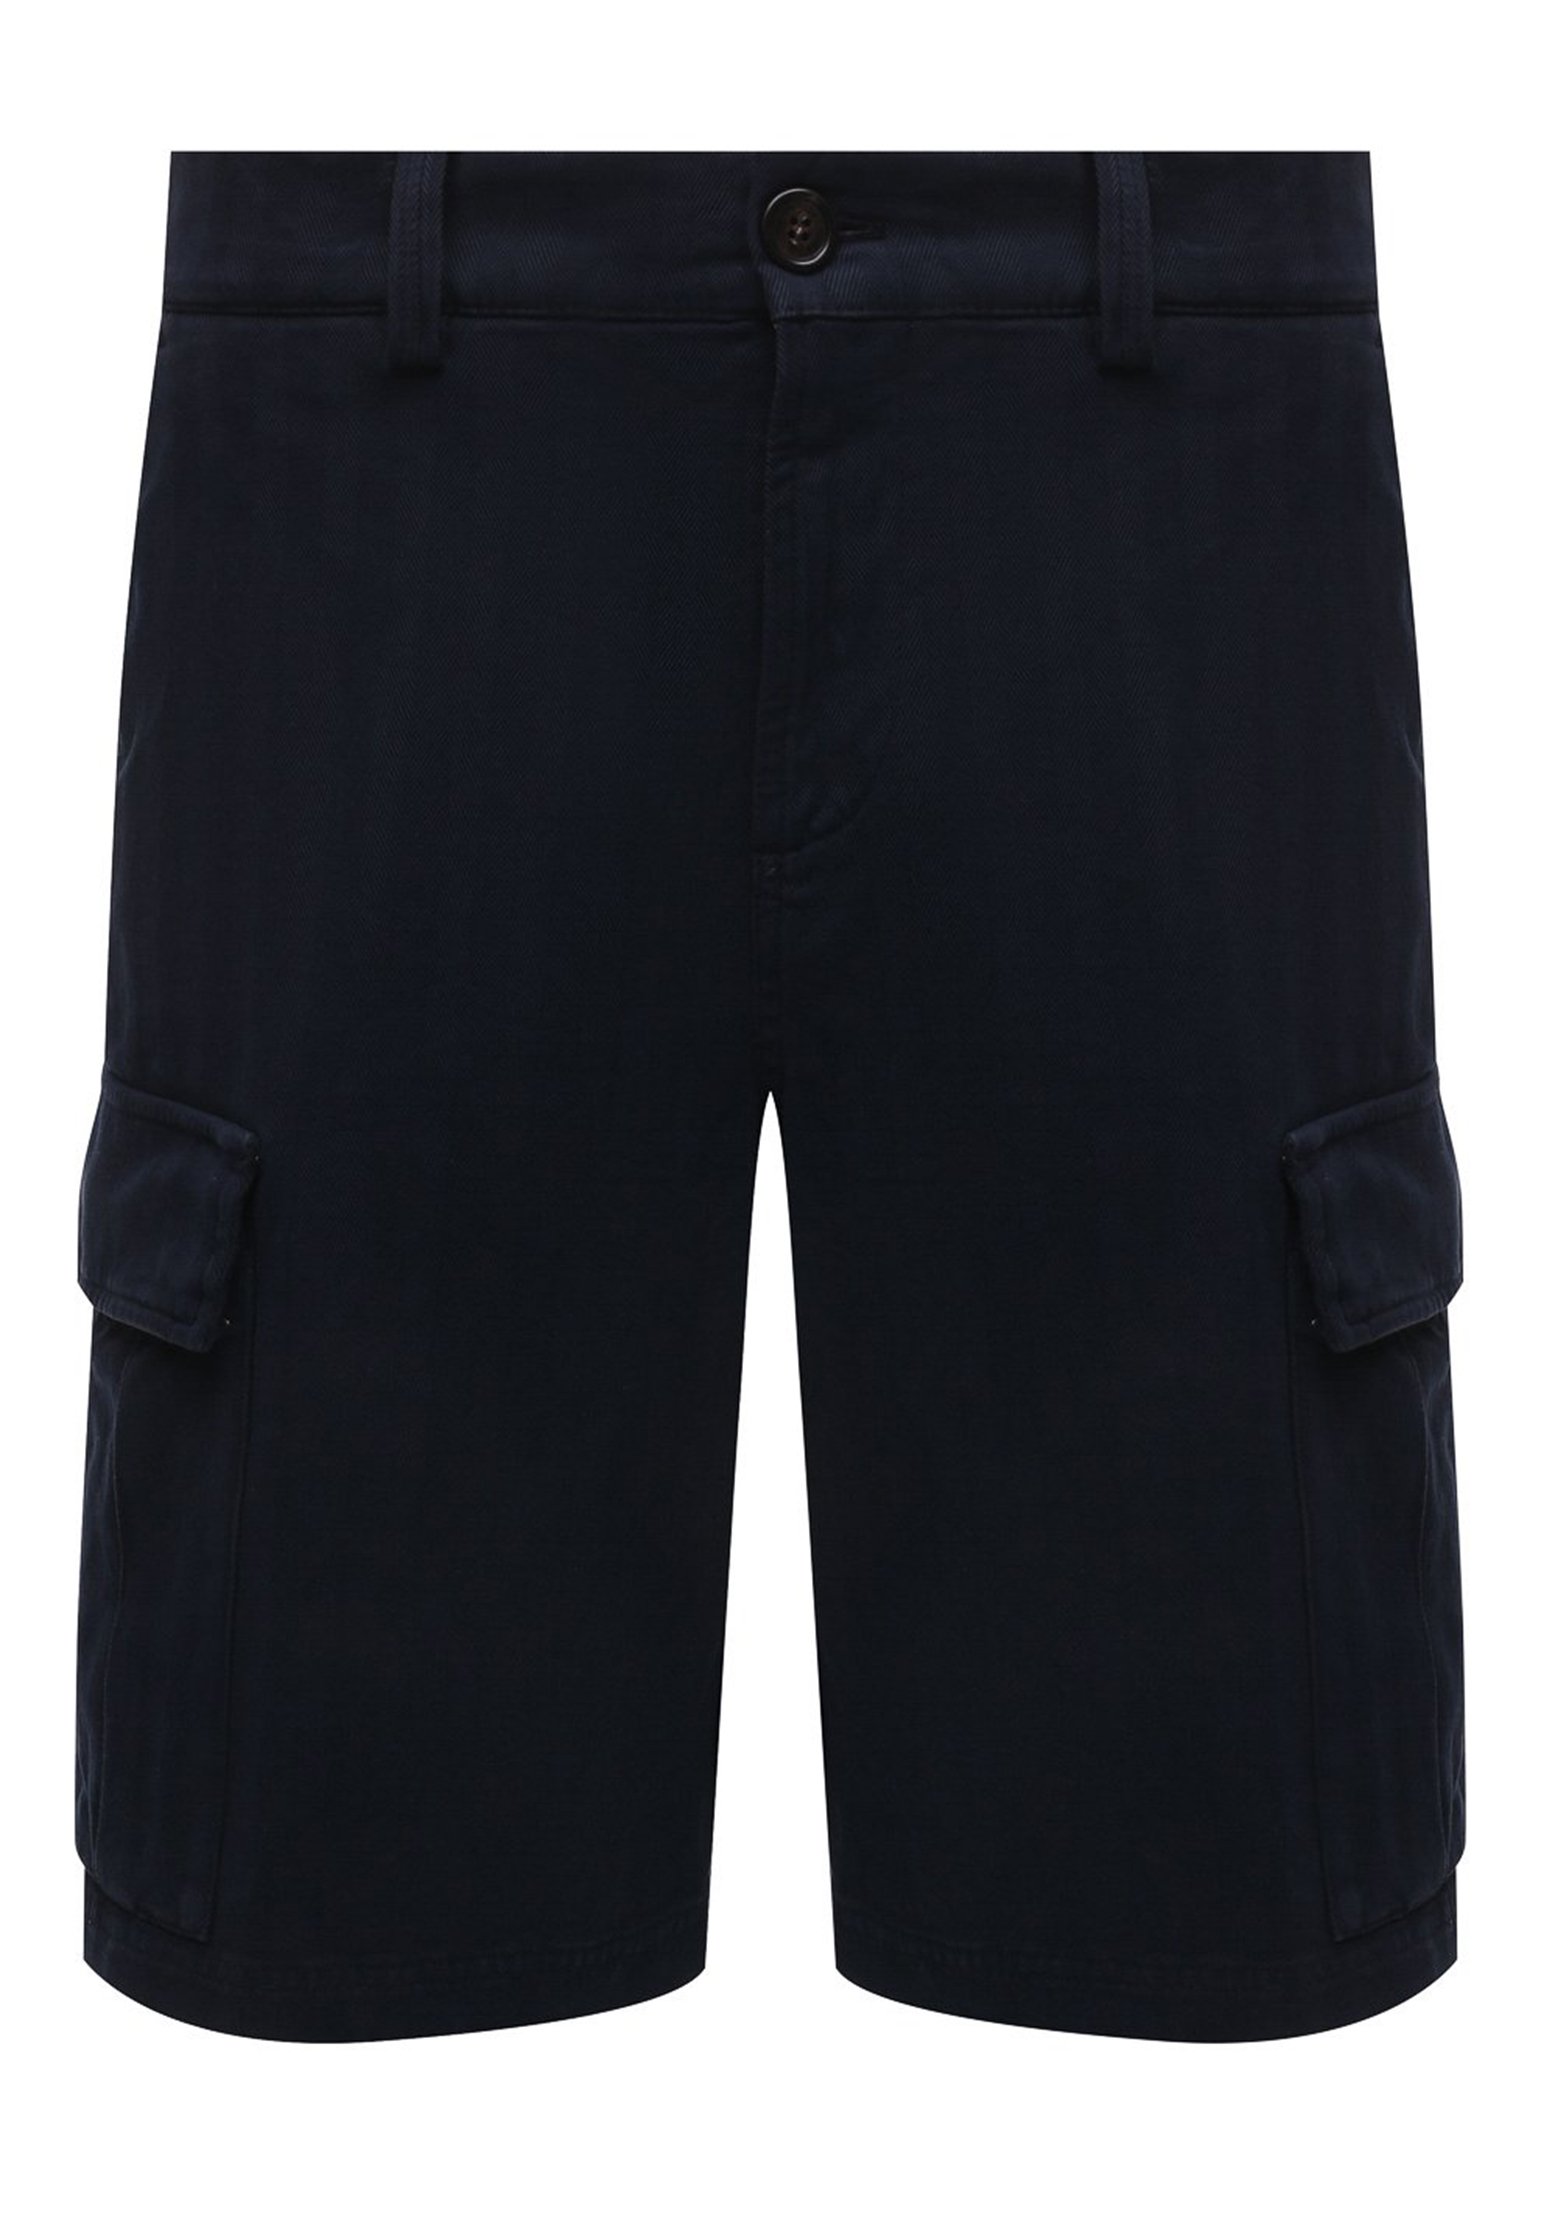 Bermuda shorts BRUNELLO CUCINELLI Color: dark blue (Code: 173) in online store Allure